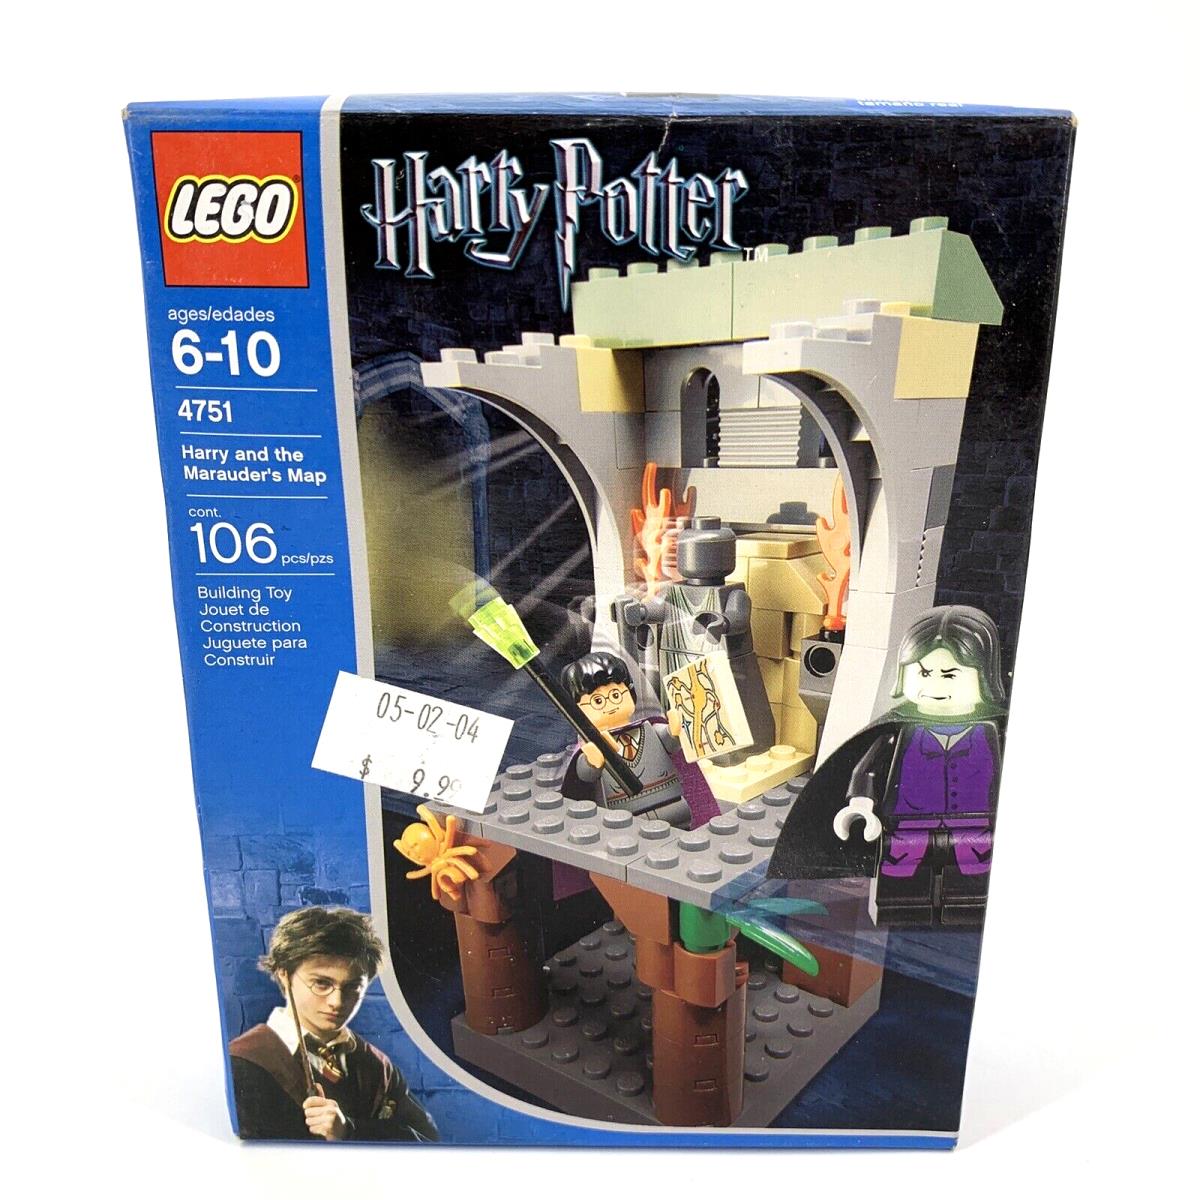 Lego Harry Potter Set 4751 Harry and The Marauder`s Map